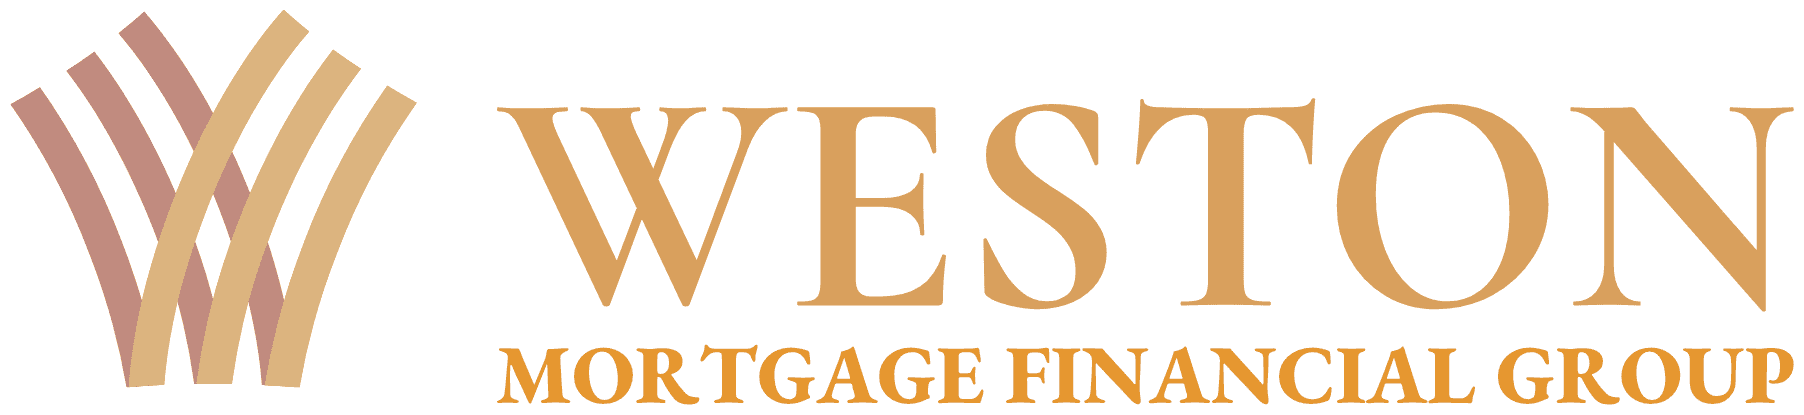 Weston Mortgage Financial Group LLC